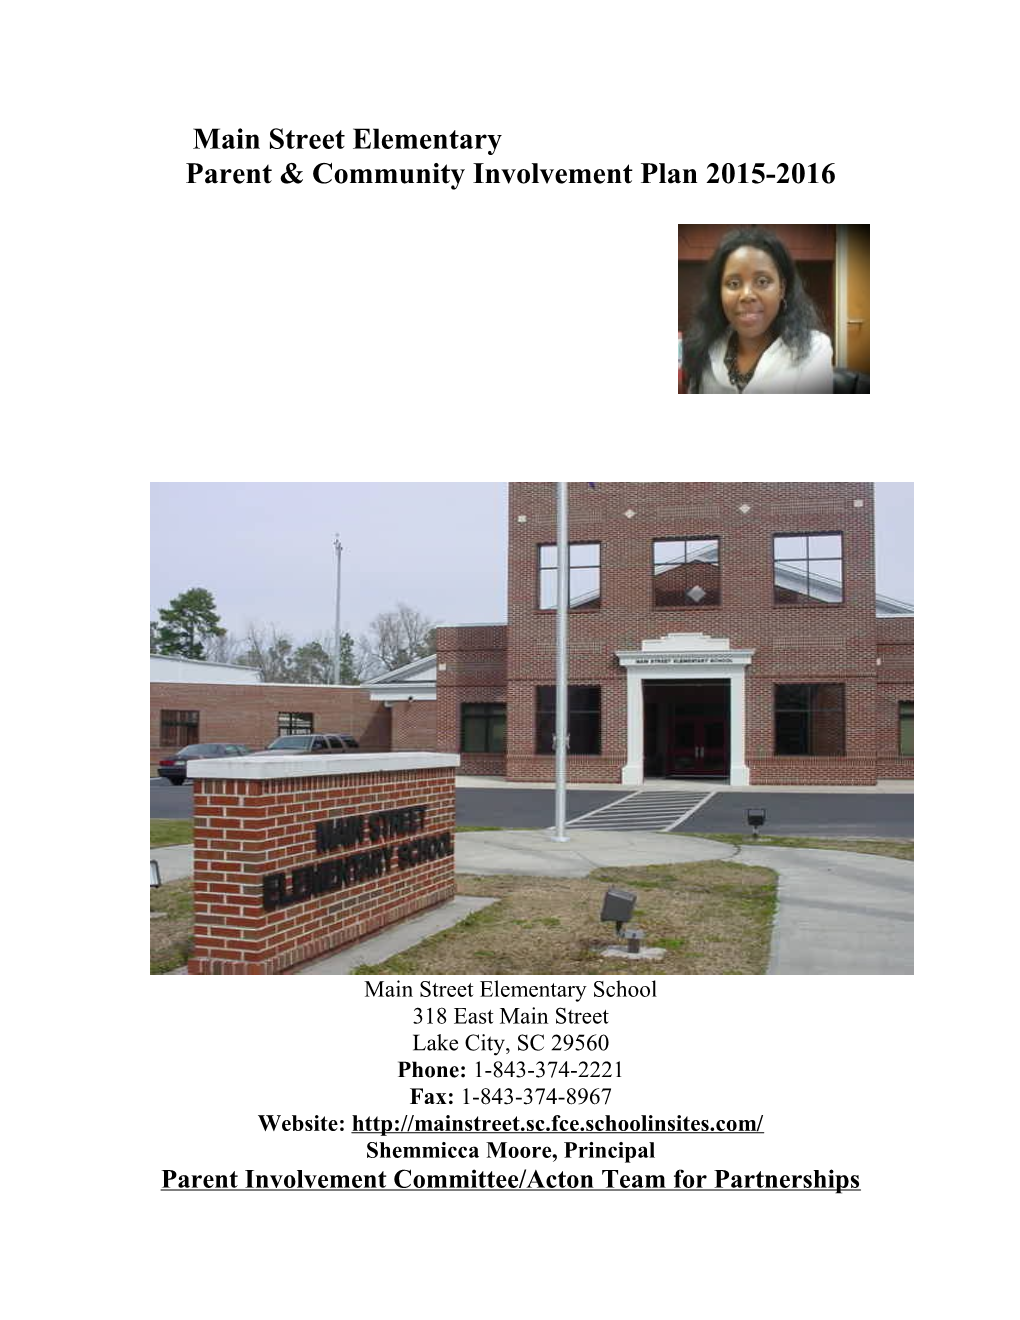 Parent & Community Involvement Plan 2015-2016